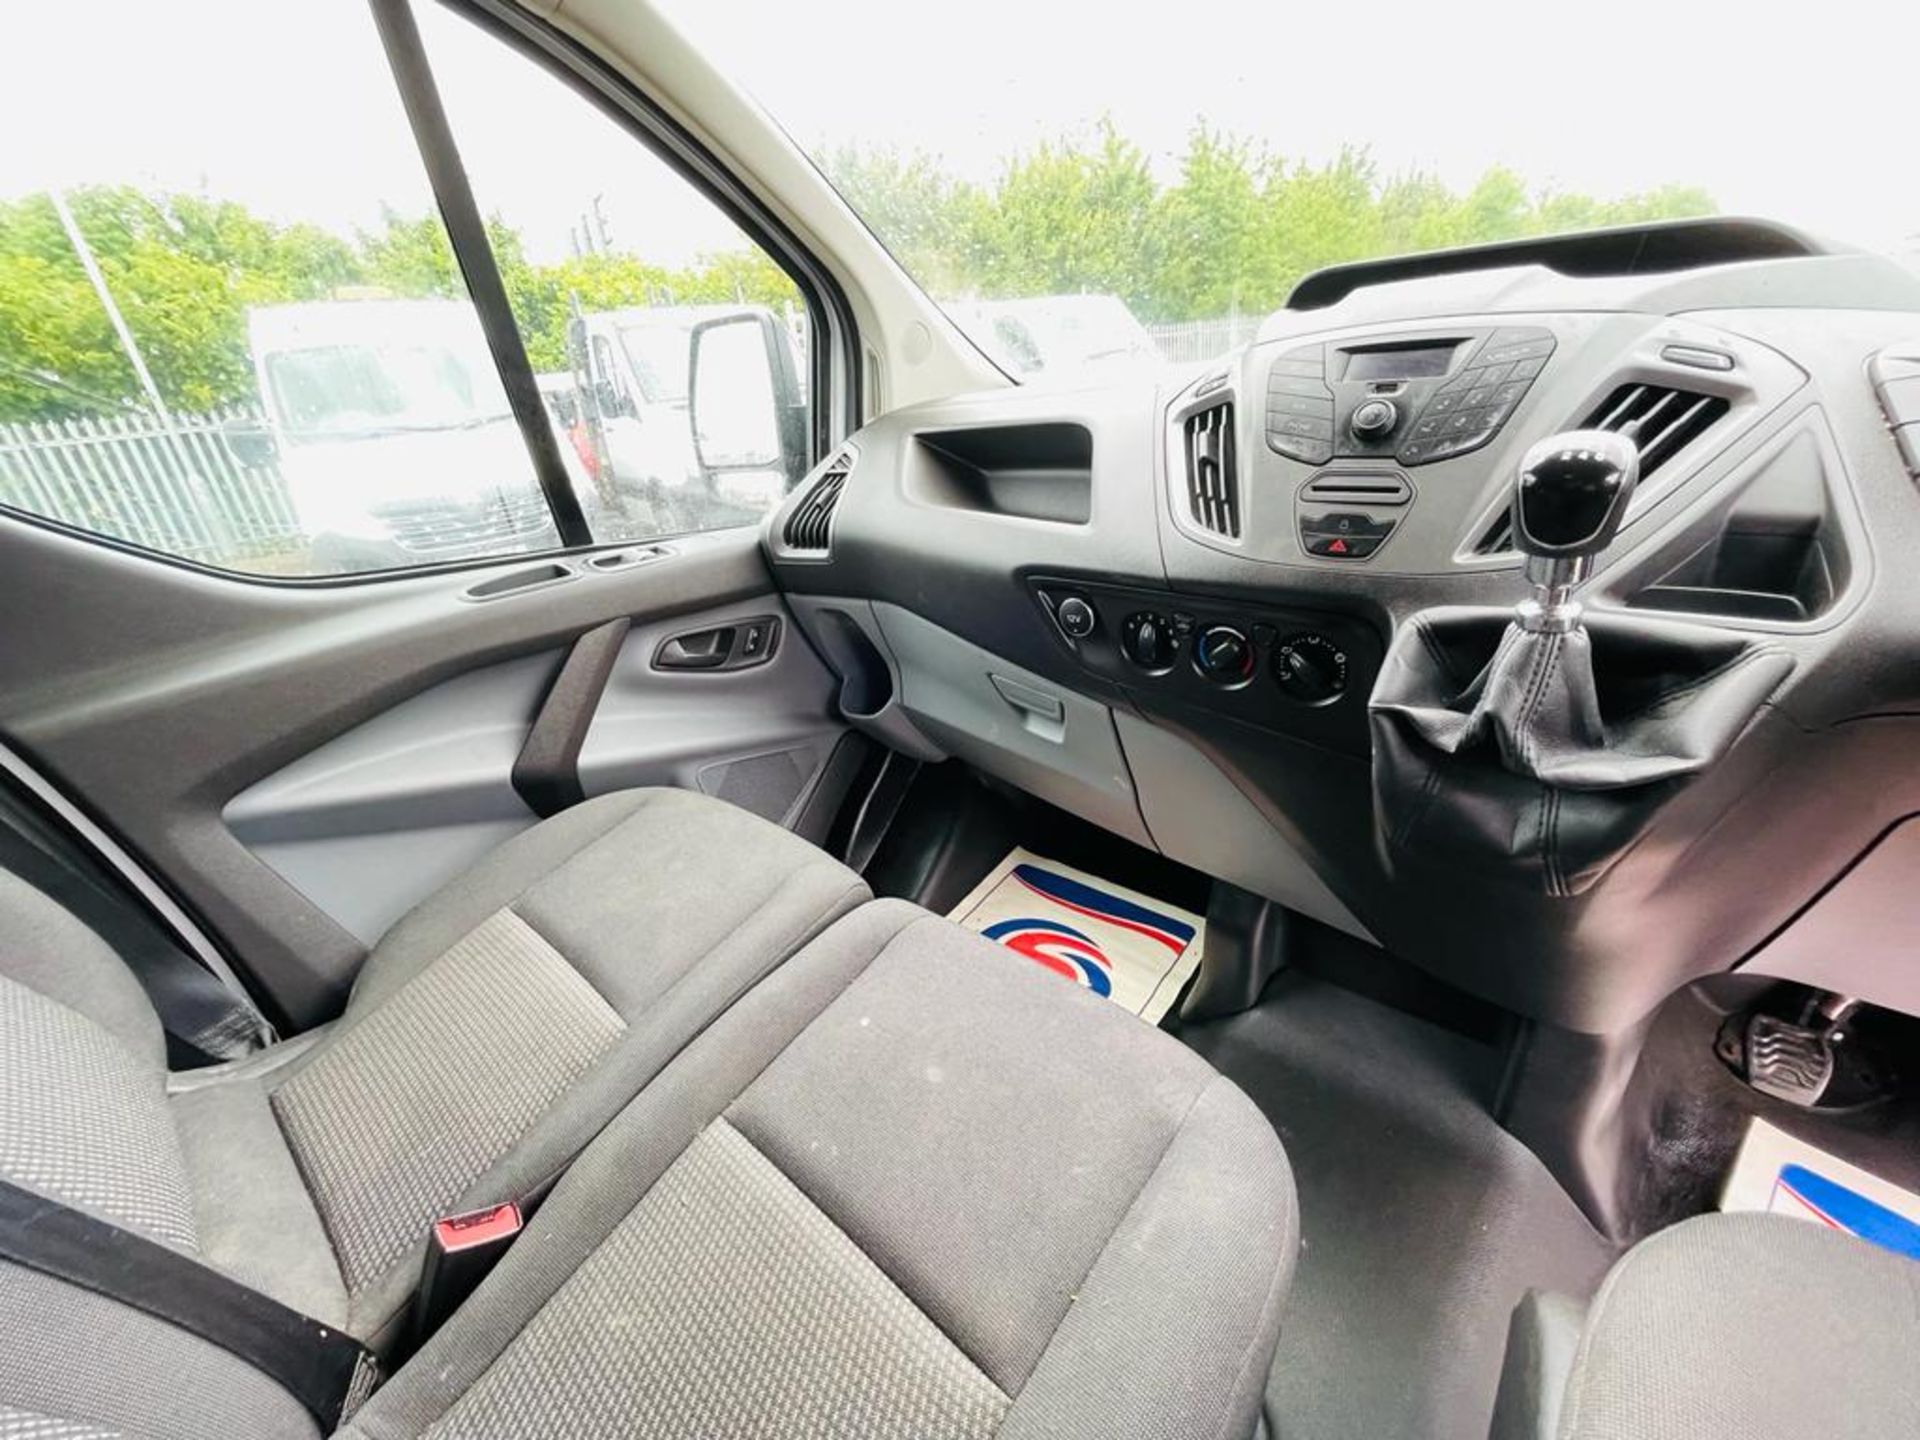 Ford Transit Custom 2.0 TDCI 105 290 L1 H1 2018 '67 Reg' - Euro 6 - ULEZ Compliant Long wheel base - Image 11 of 16